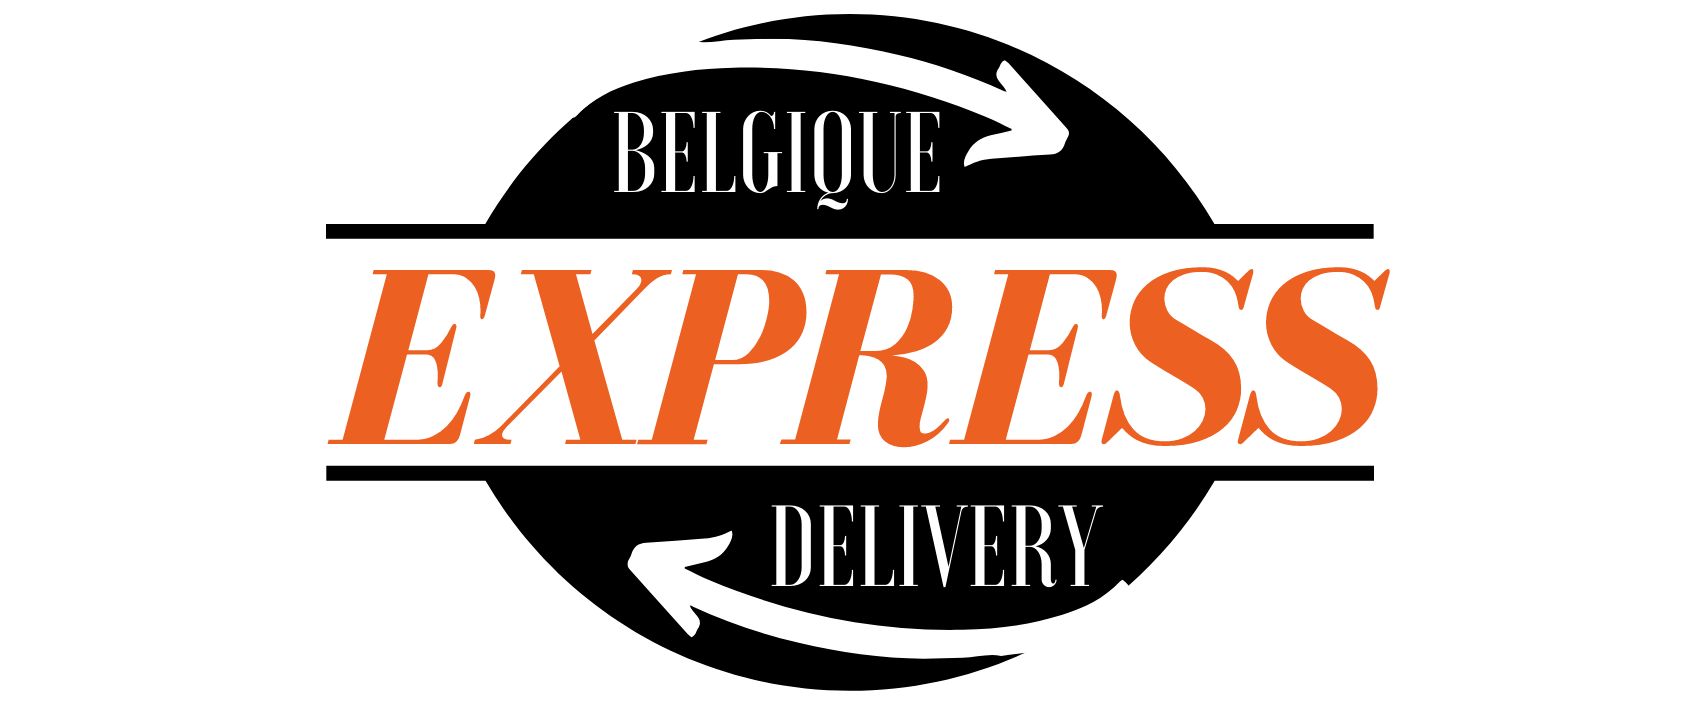 Belgique Express Delivery